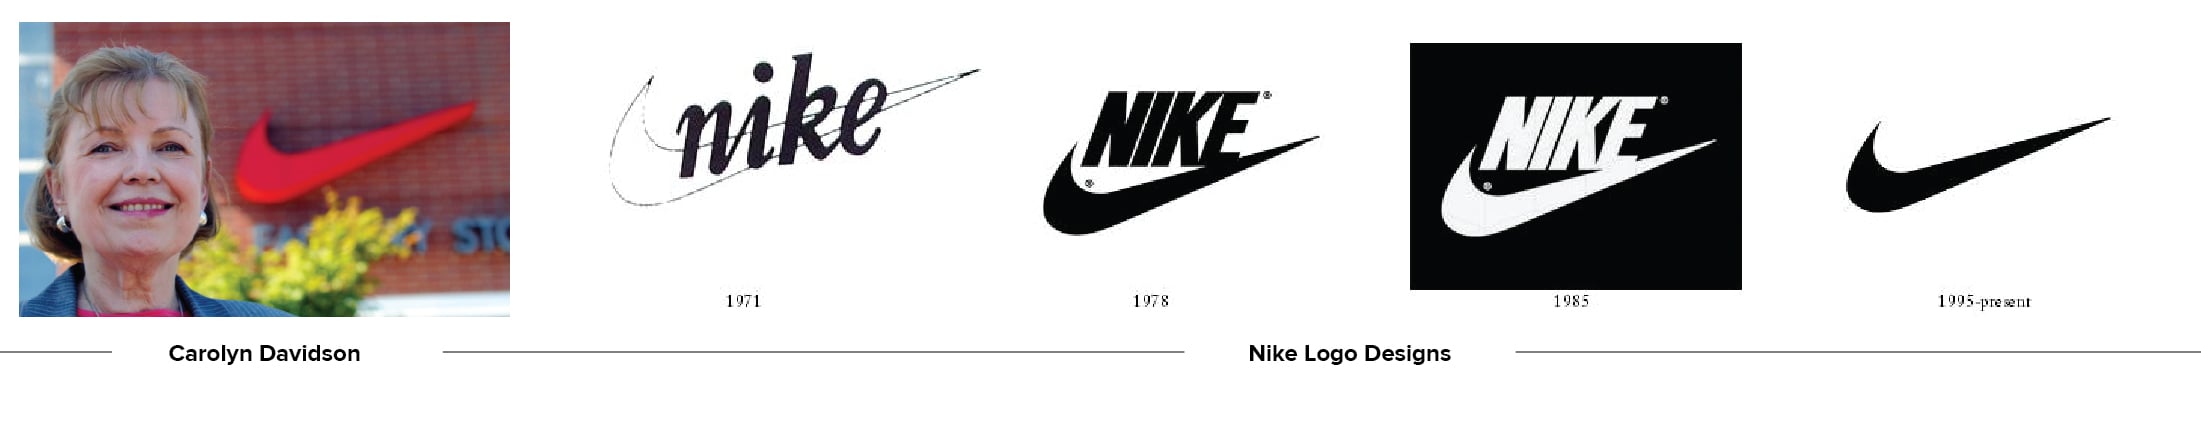 nike logo design history